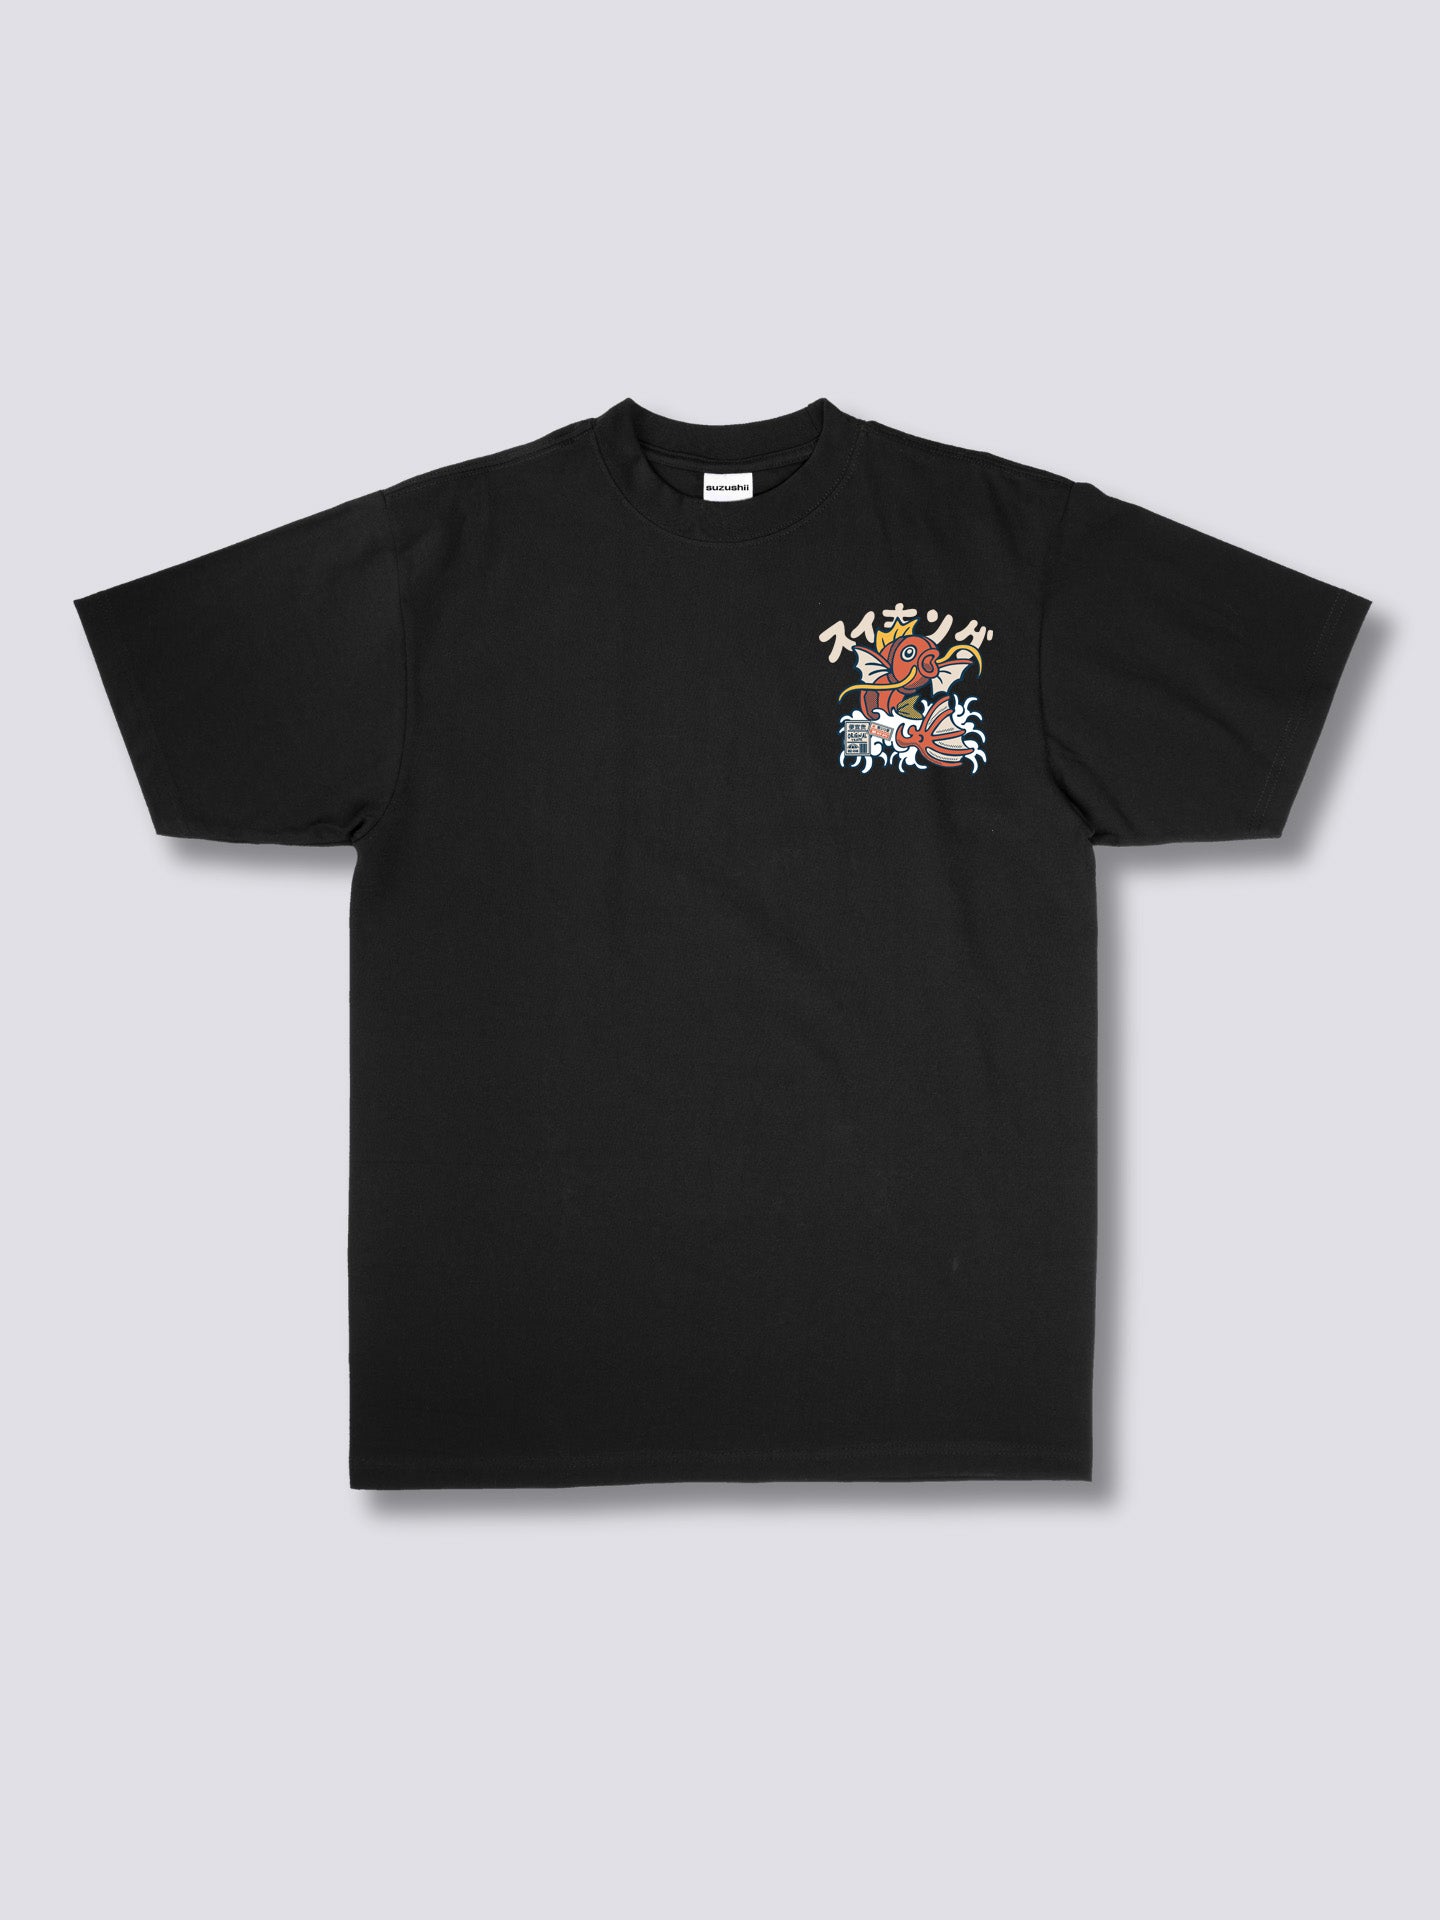 Koi King T-Shirt